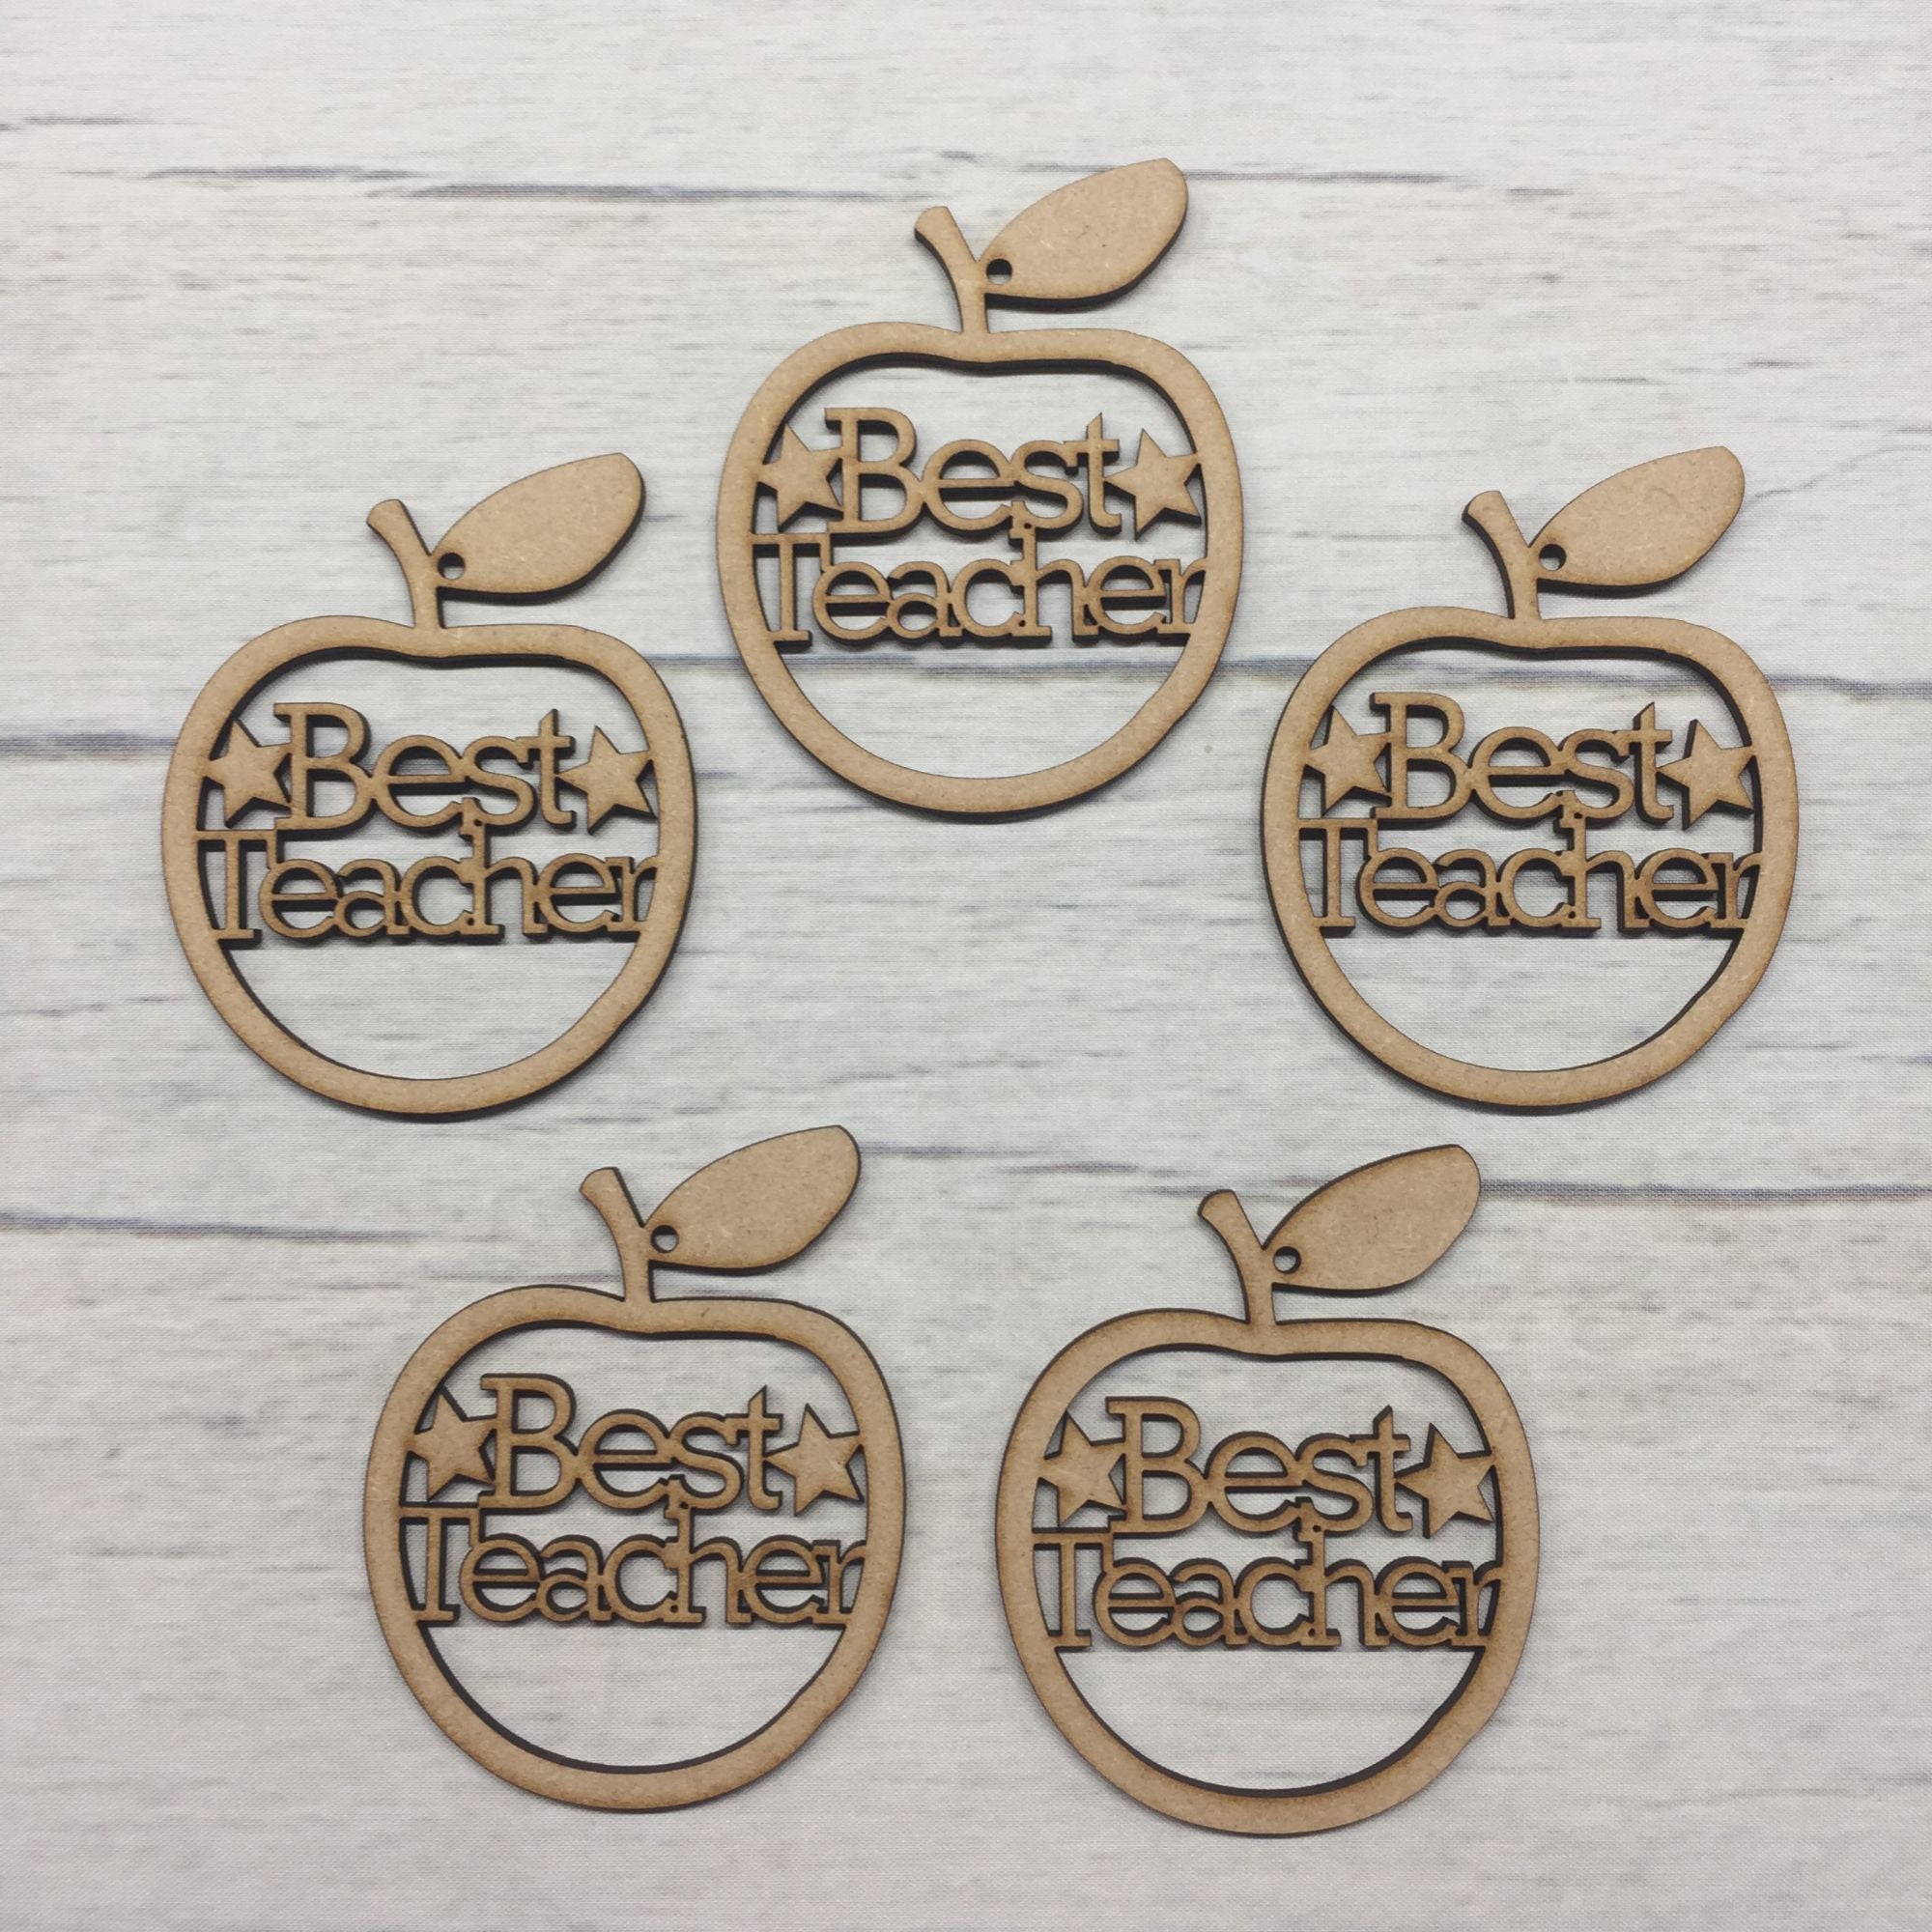 Base MDF - Best Teacher' apple hangers - set of 5